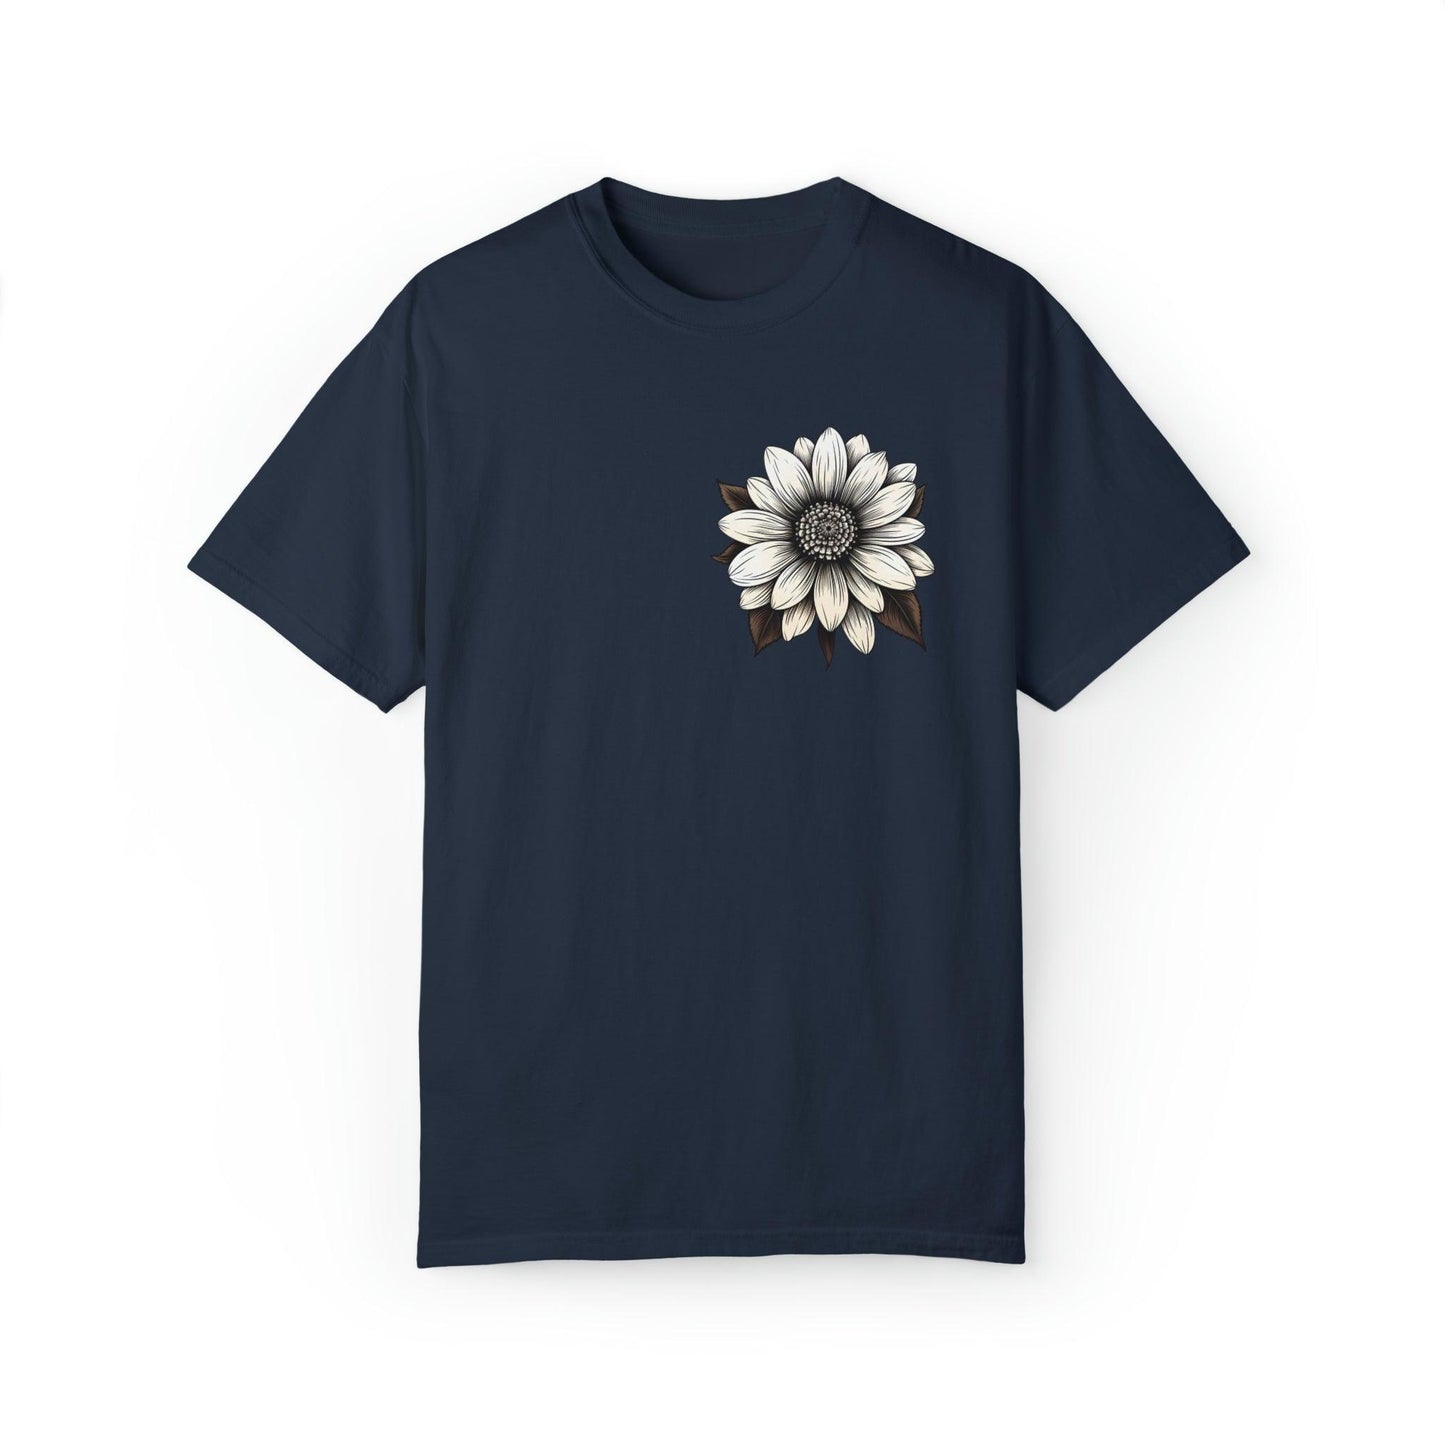 Sunflower Shirt Women Flower Shirt Aesthetic Women Top Floral Graphic Tee Floral Shirt Flower T-shirt, Wild Flower Shirt Gift For Her - Giftsmojo